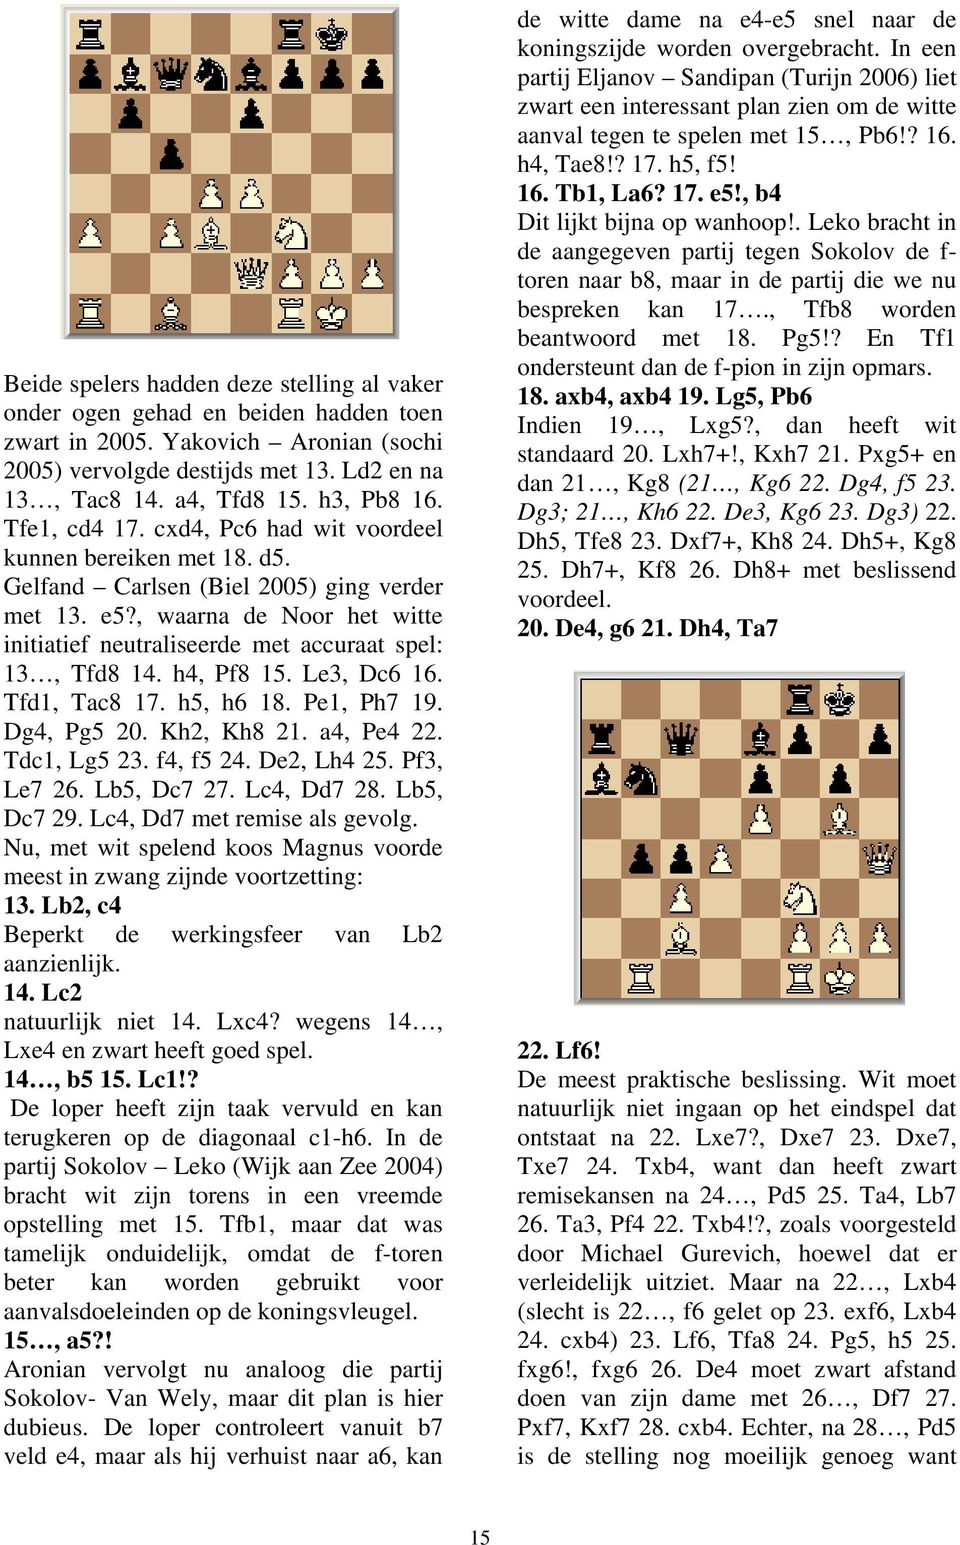 , waarna de Noor het witte initiatief neutraliseerde met accuraat spel: 13, Tfd8 14. h4, Pf8 15. Le3, Dc6 16. Tfd1, Tac8 17. h5, h6 18. Pe1, Ph7 19. Dg4, Pg5 20. Kh2, Kh8 21. a4, Pe4 22. Tdc1, Lg5 23.